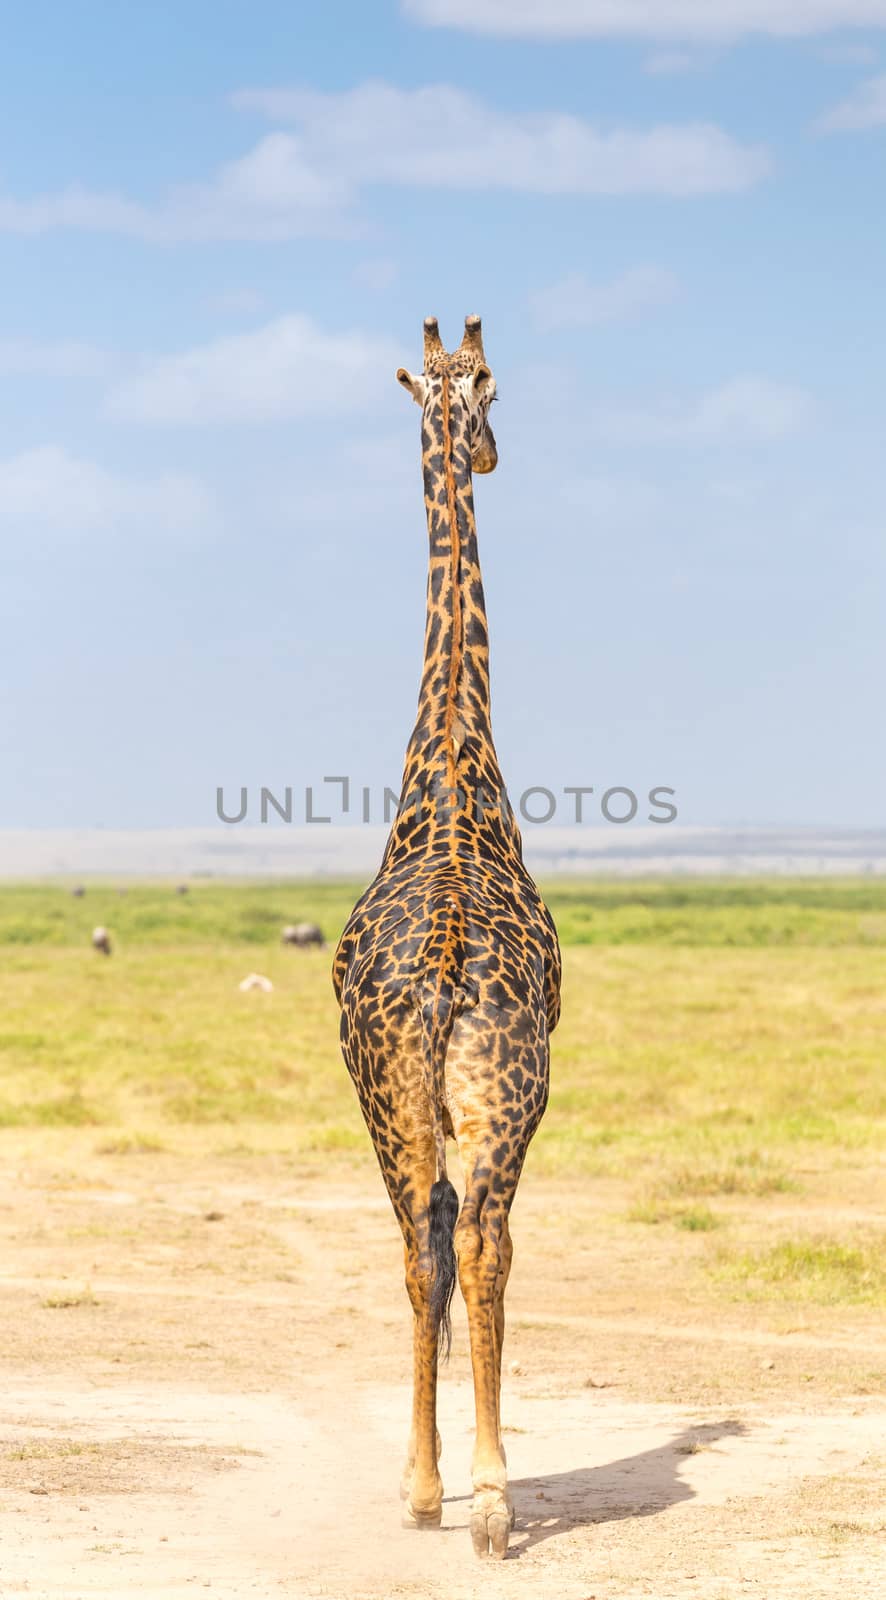 Solitary wild giraffe in Amboseli national park, Kenya from the rear.